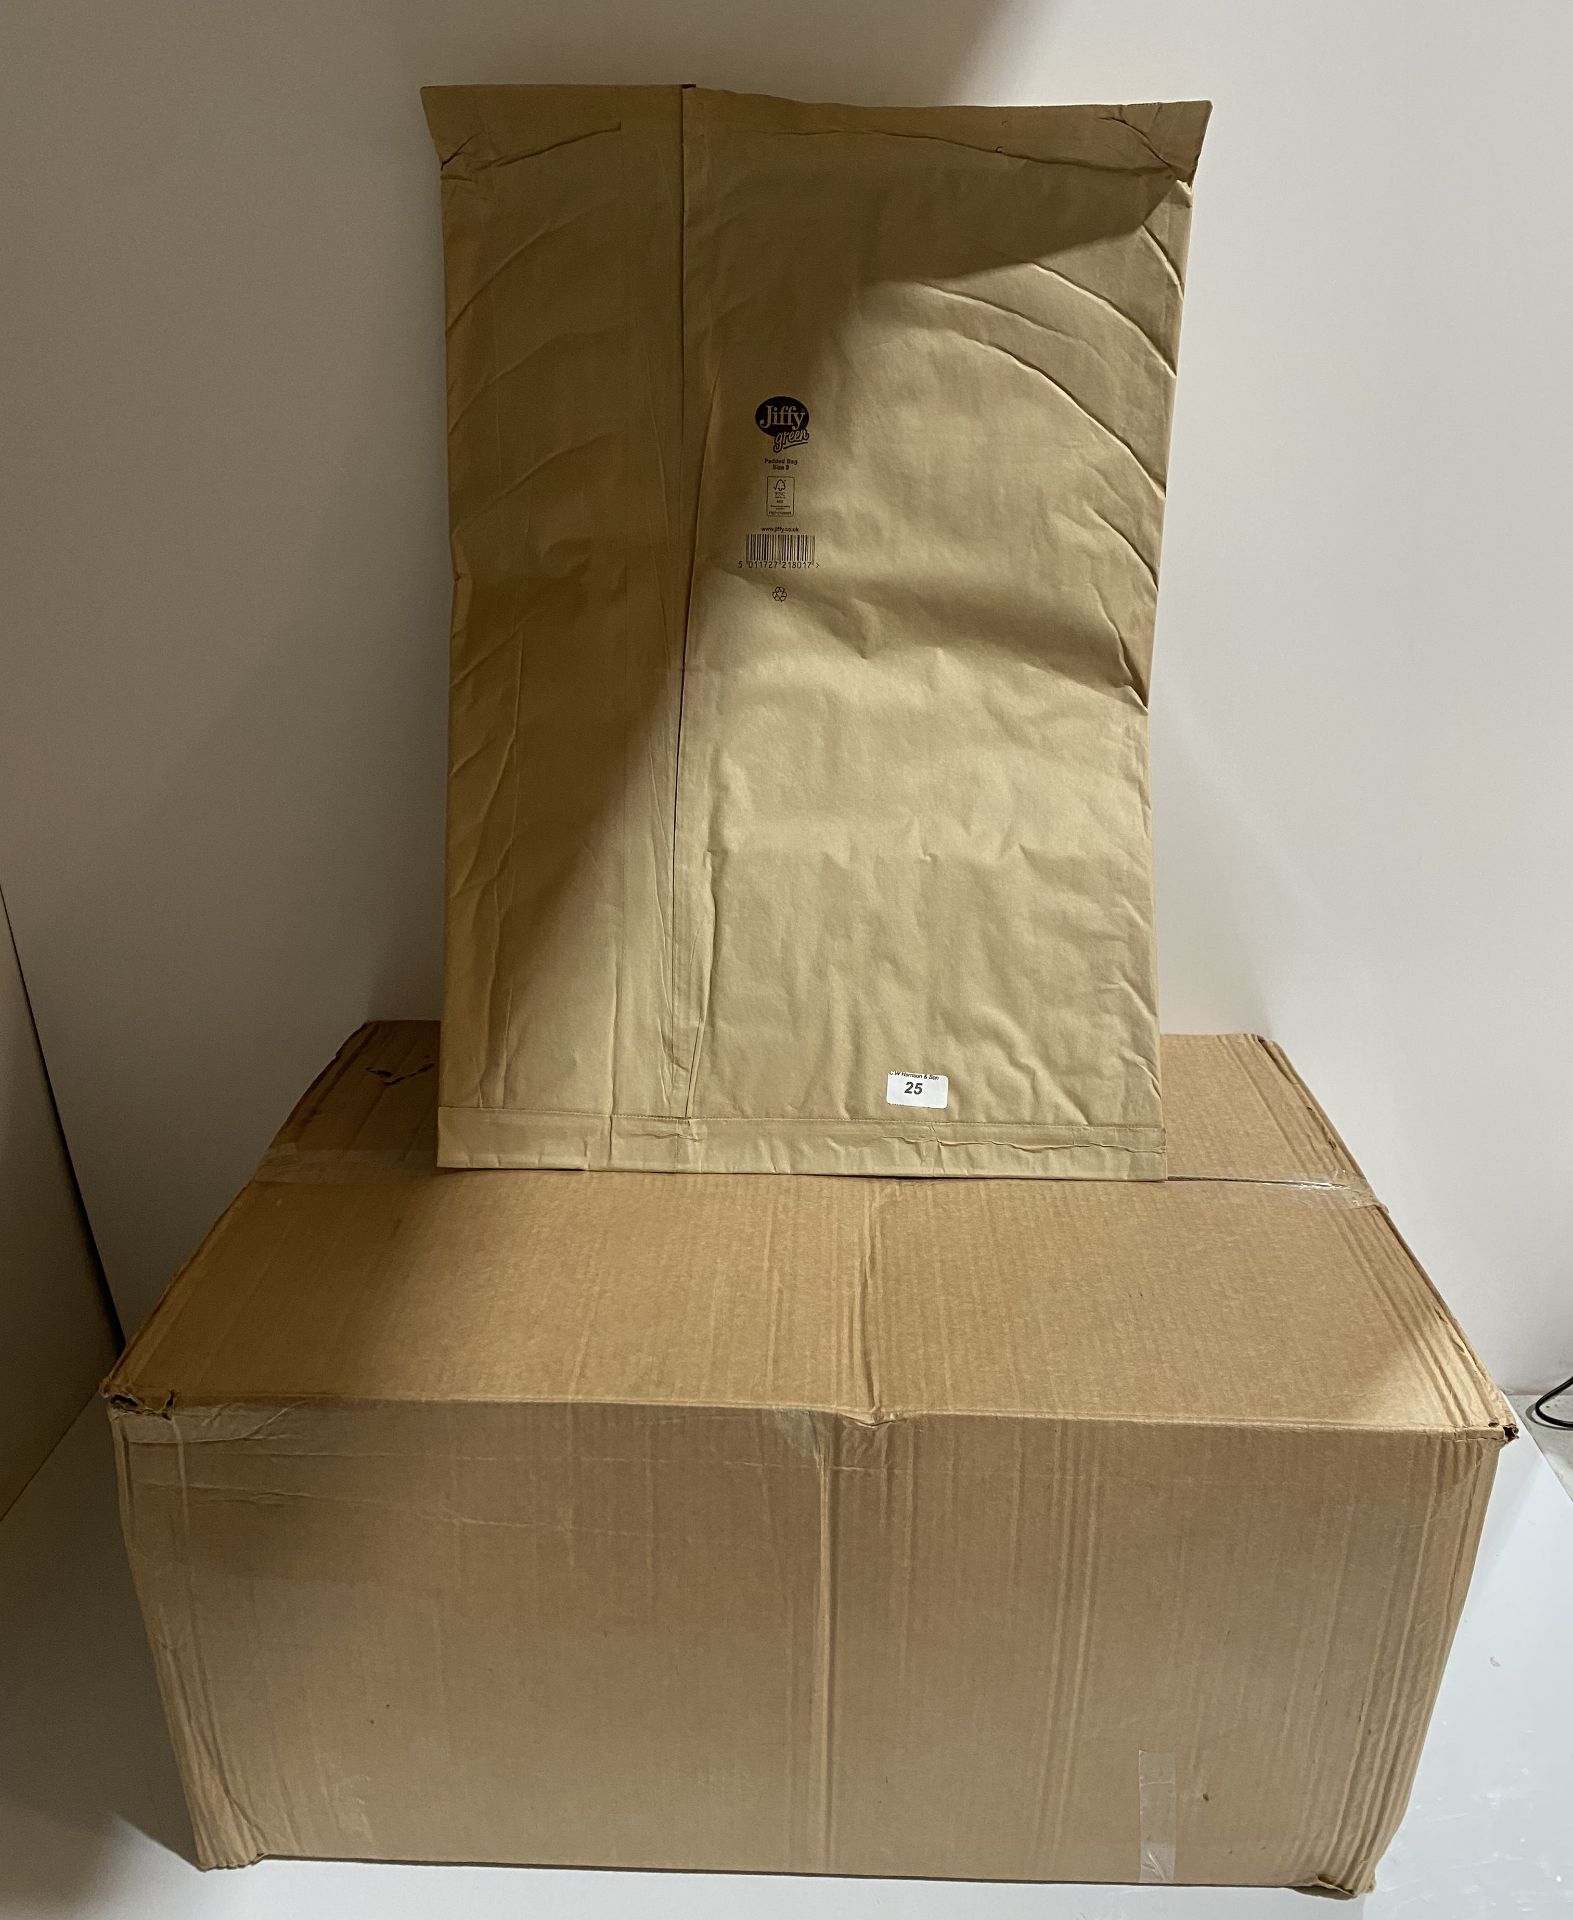 1 x box of 50 Jiffy padded bags size 8 442x661mm (saleroom location: H10)